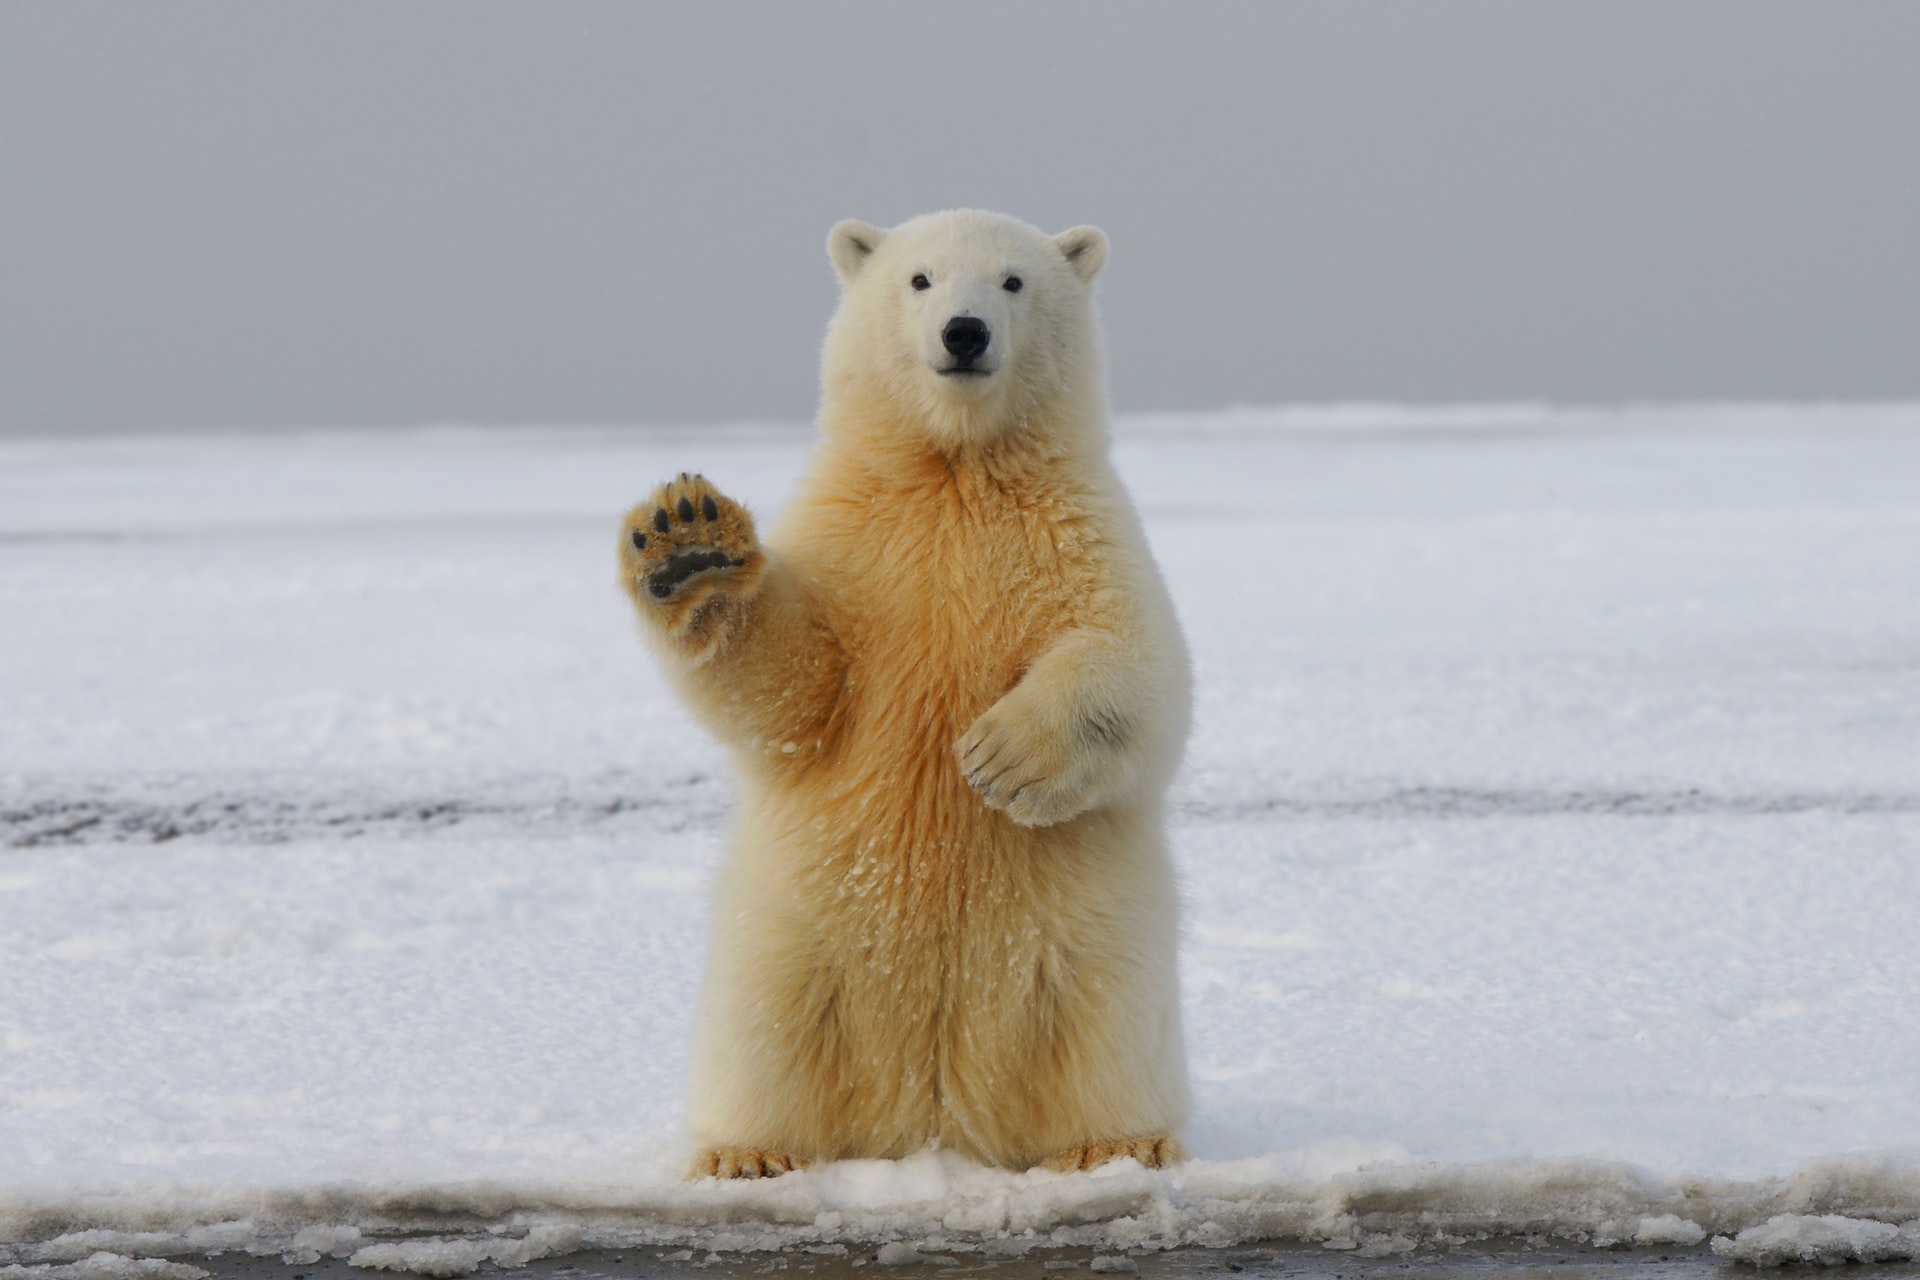 A bear waving hello.